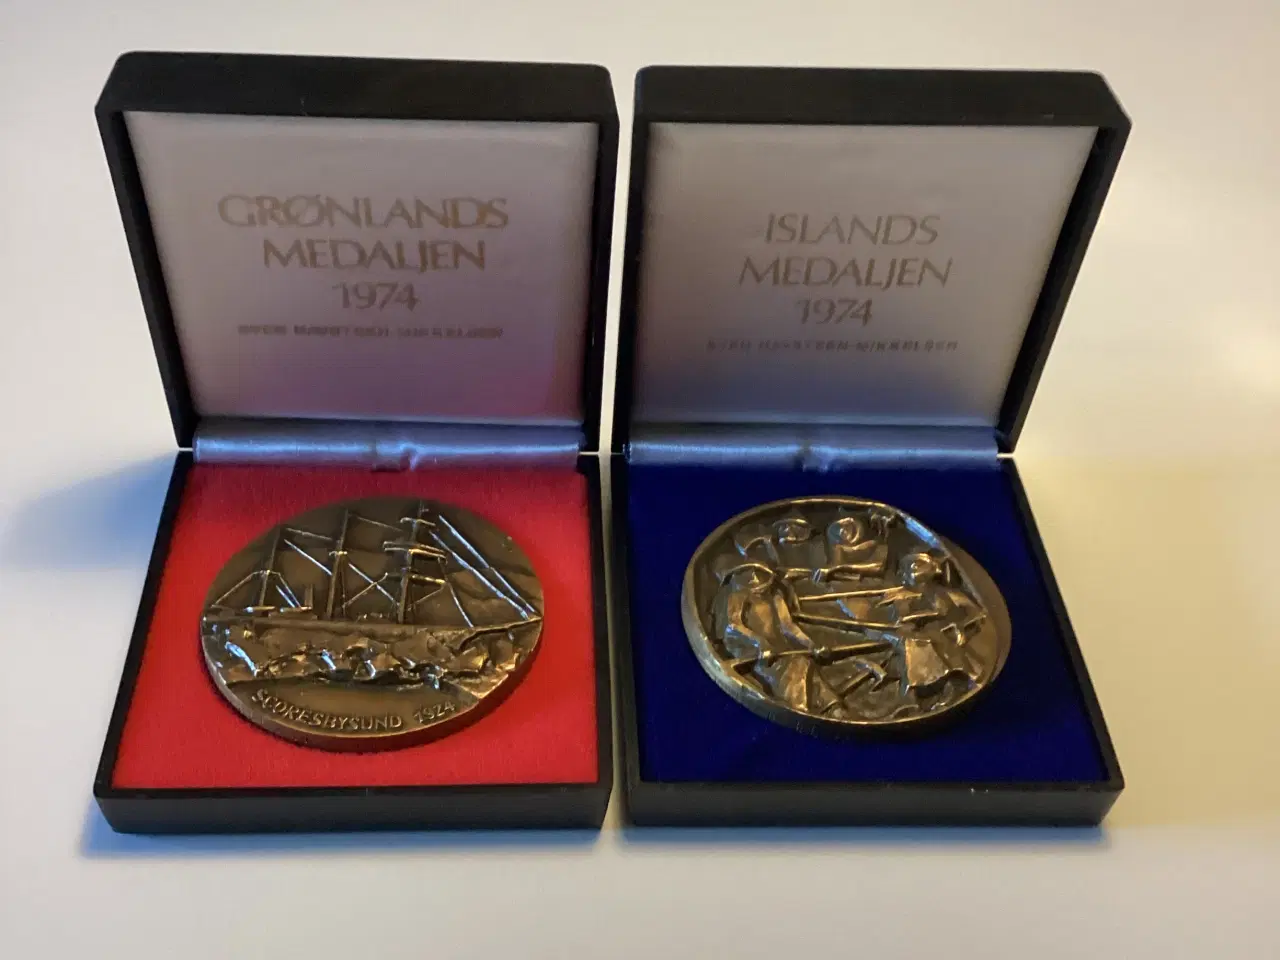 Billede 2 - Grønlands/Islands medaljen 1974